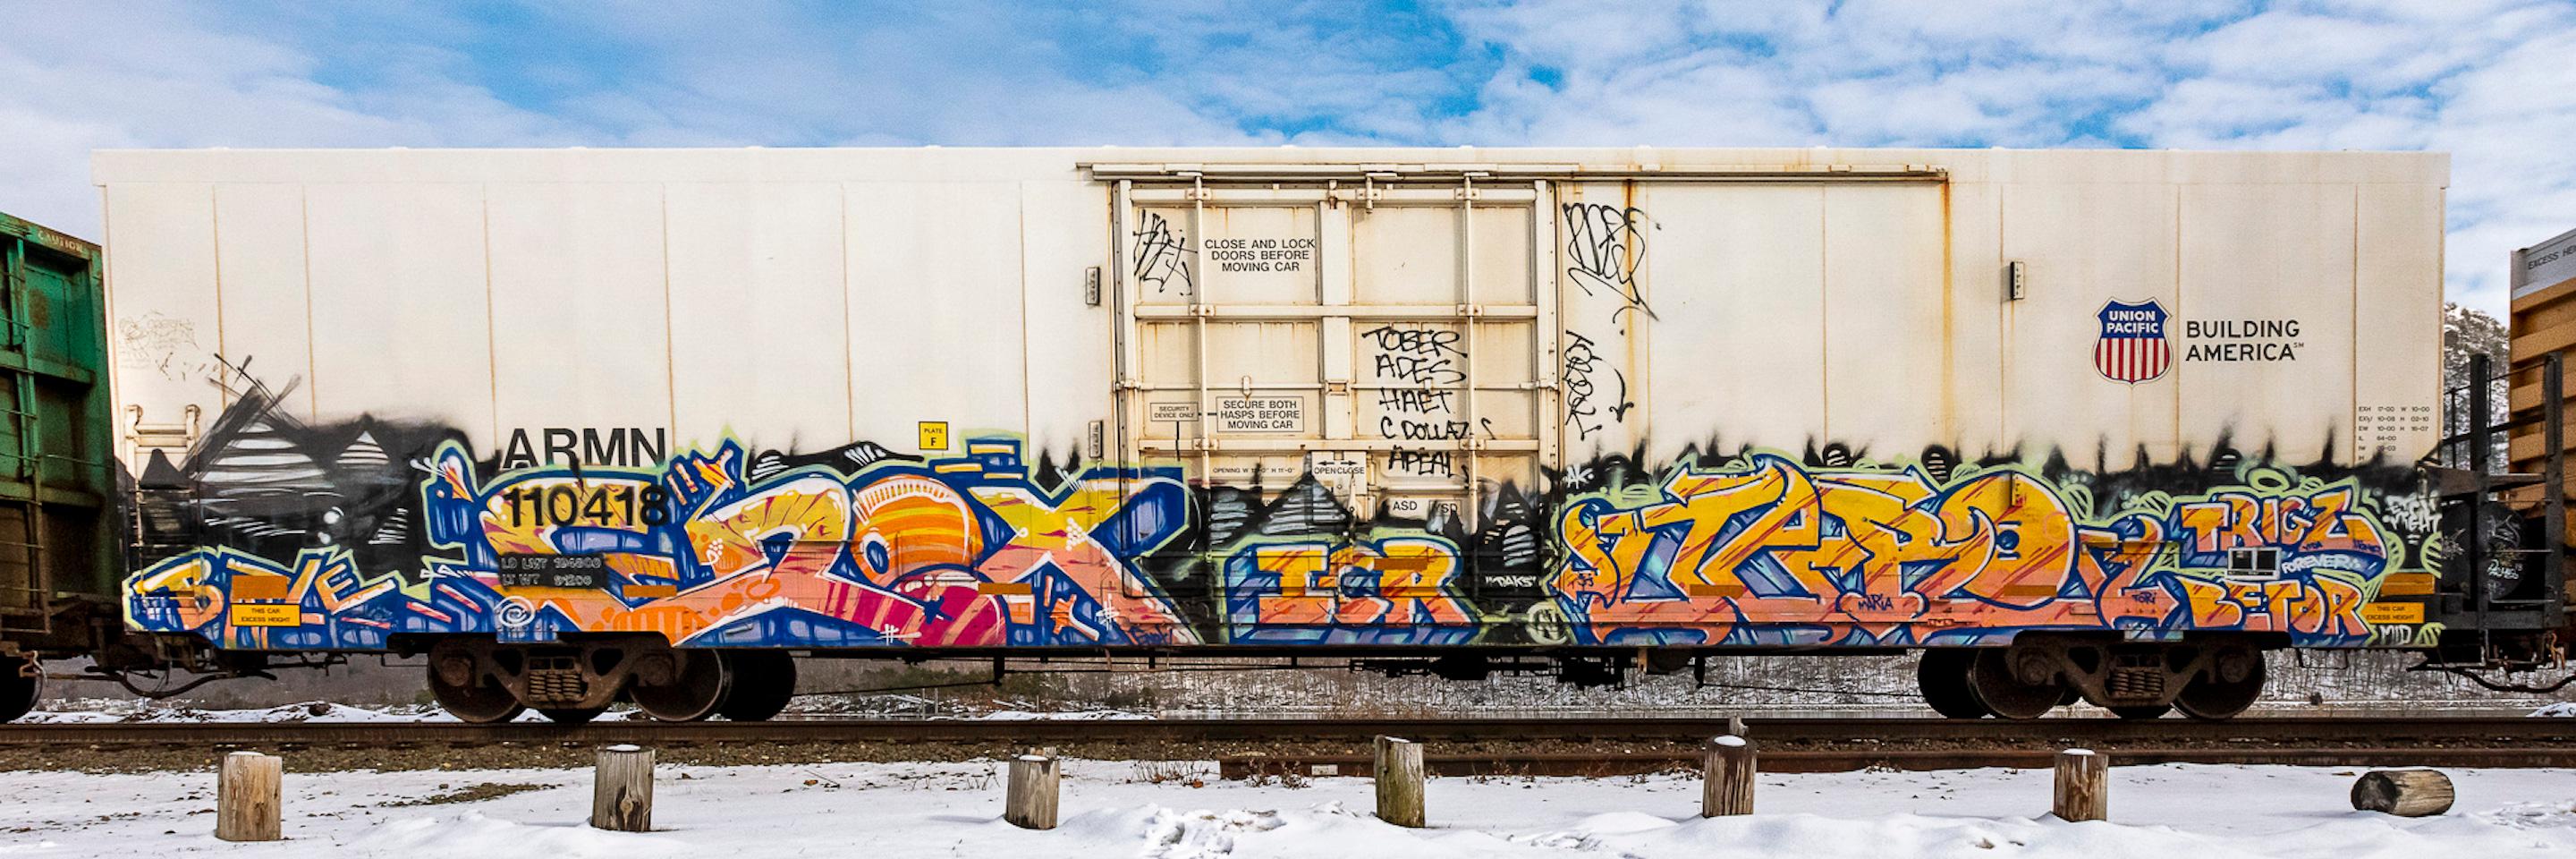 Stephen Mallon Color Photograph - "Armn 110418" Graffiti painted railroad train car, limited edition photo 10"x30"